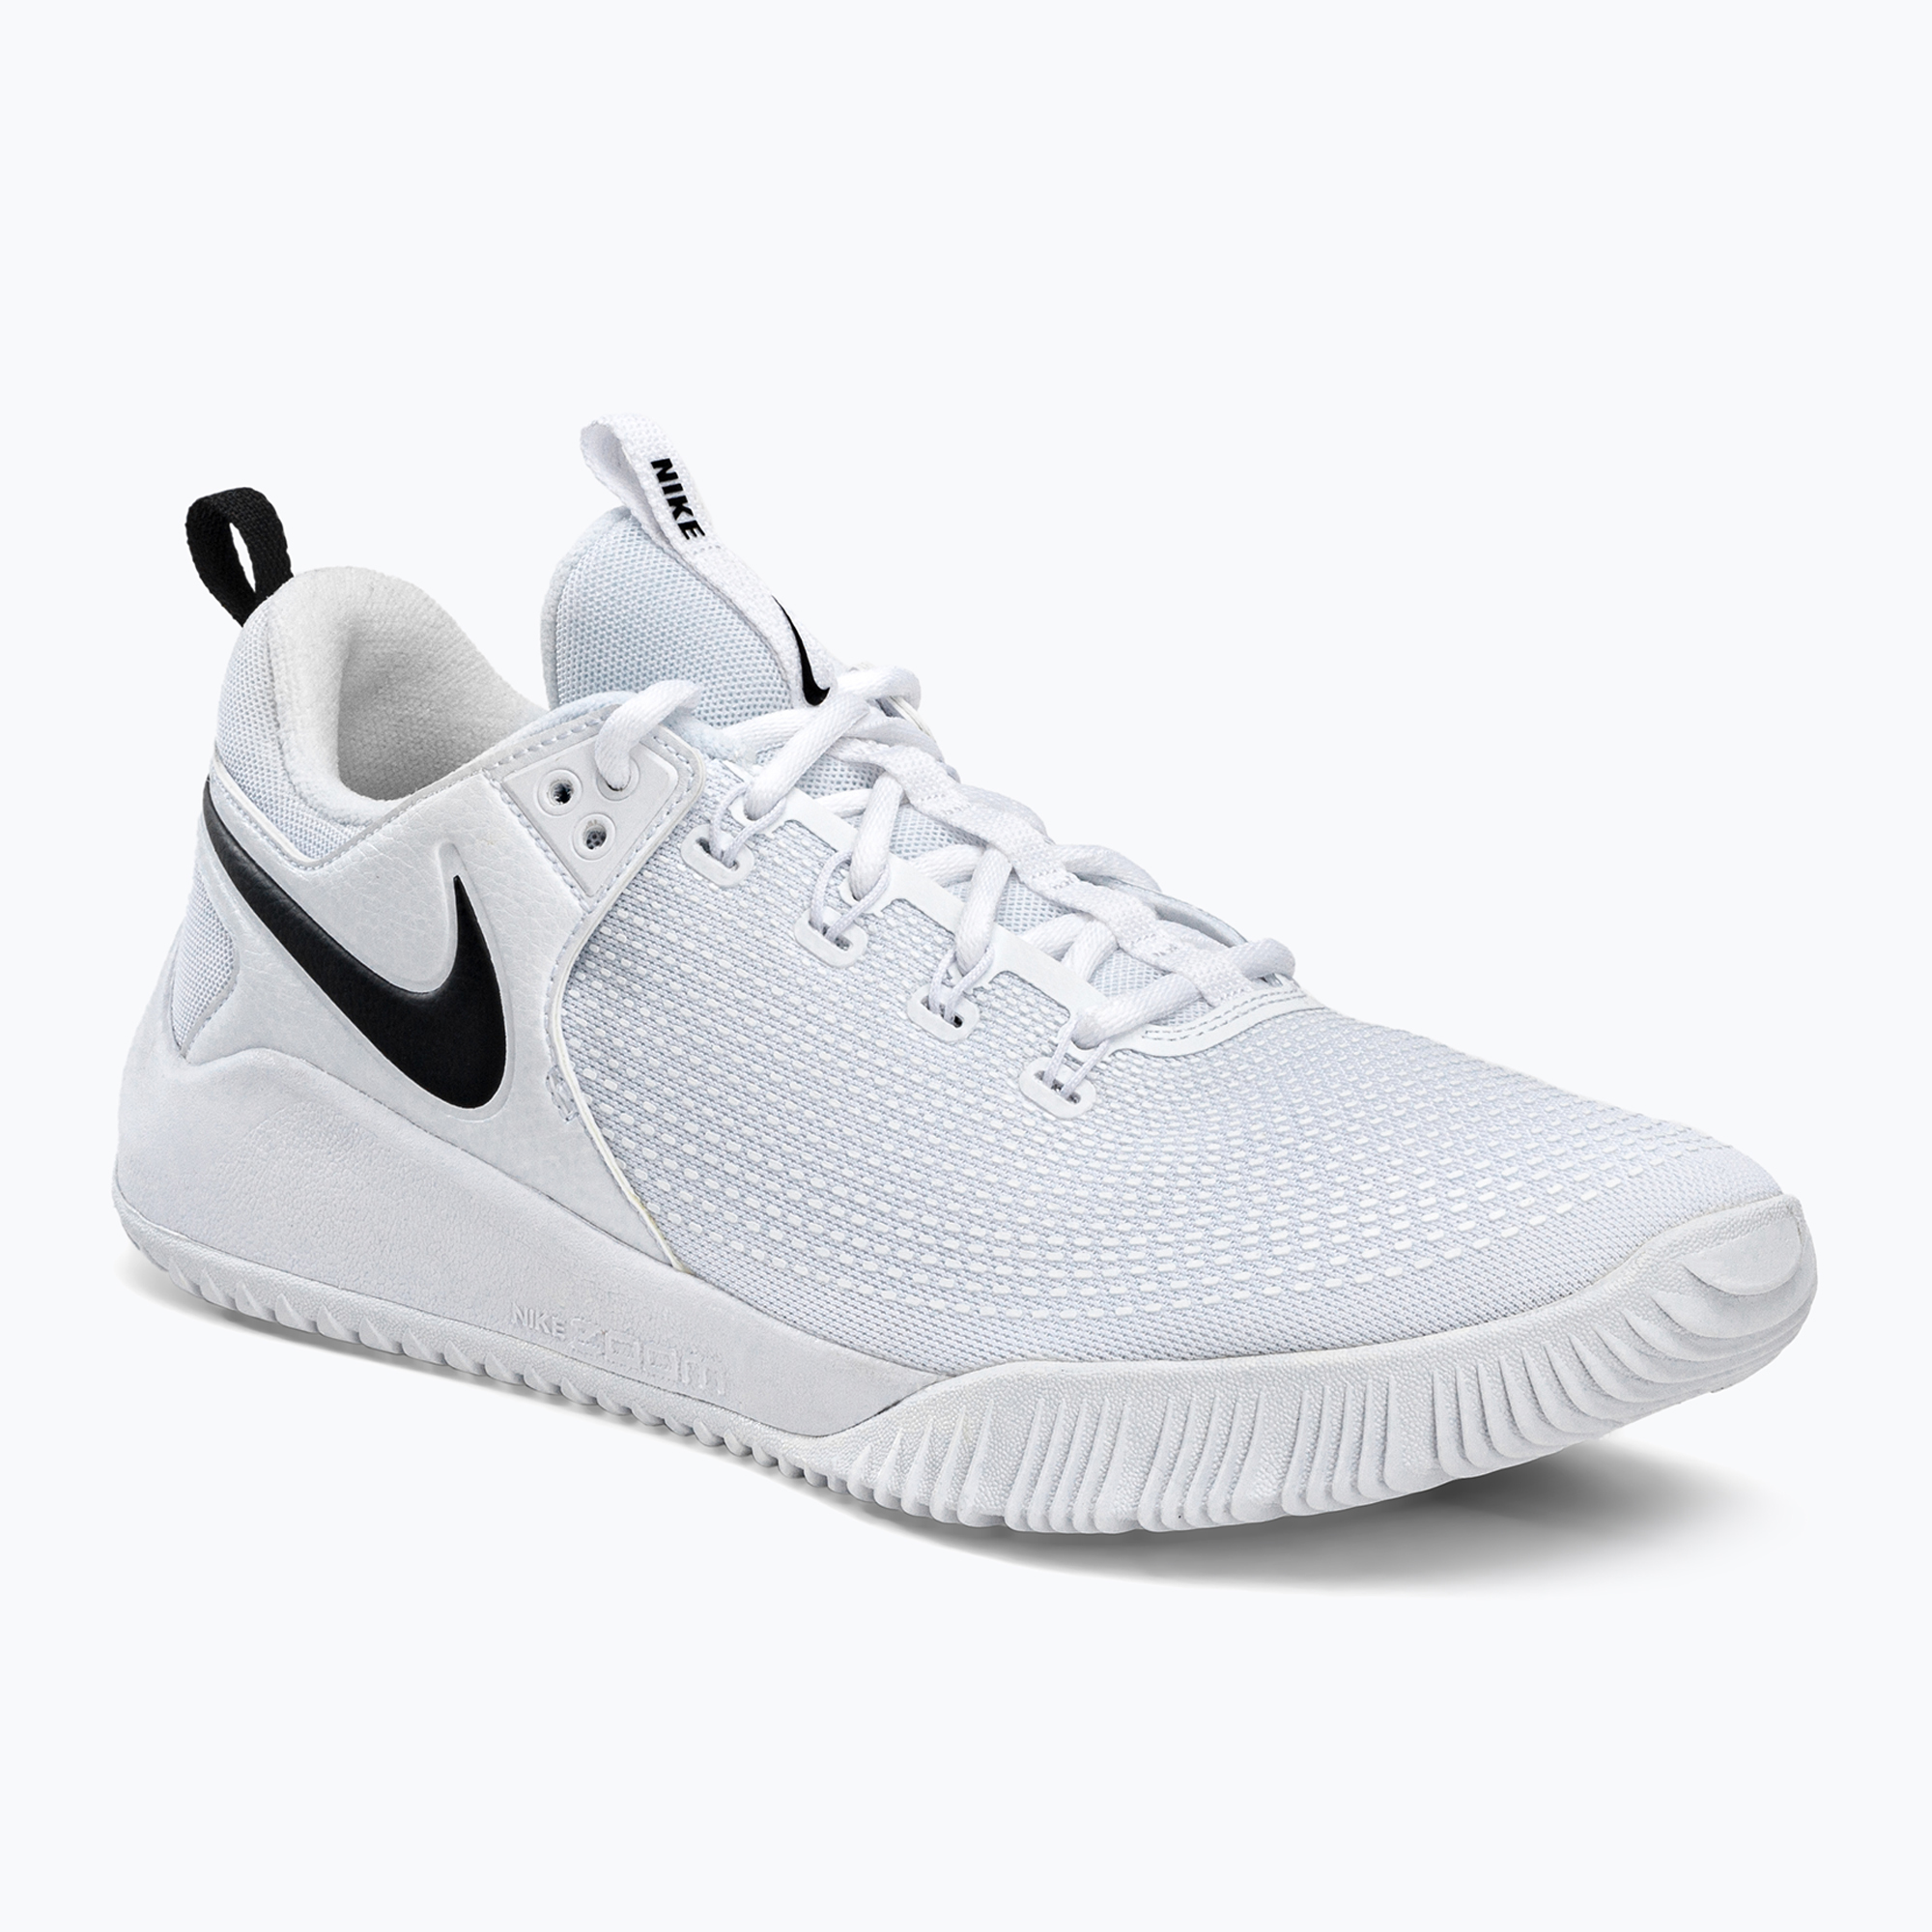 Bărbați pantofi de volei Nike Air Zoom Hyperace 2 alb și negru AR5281-101